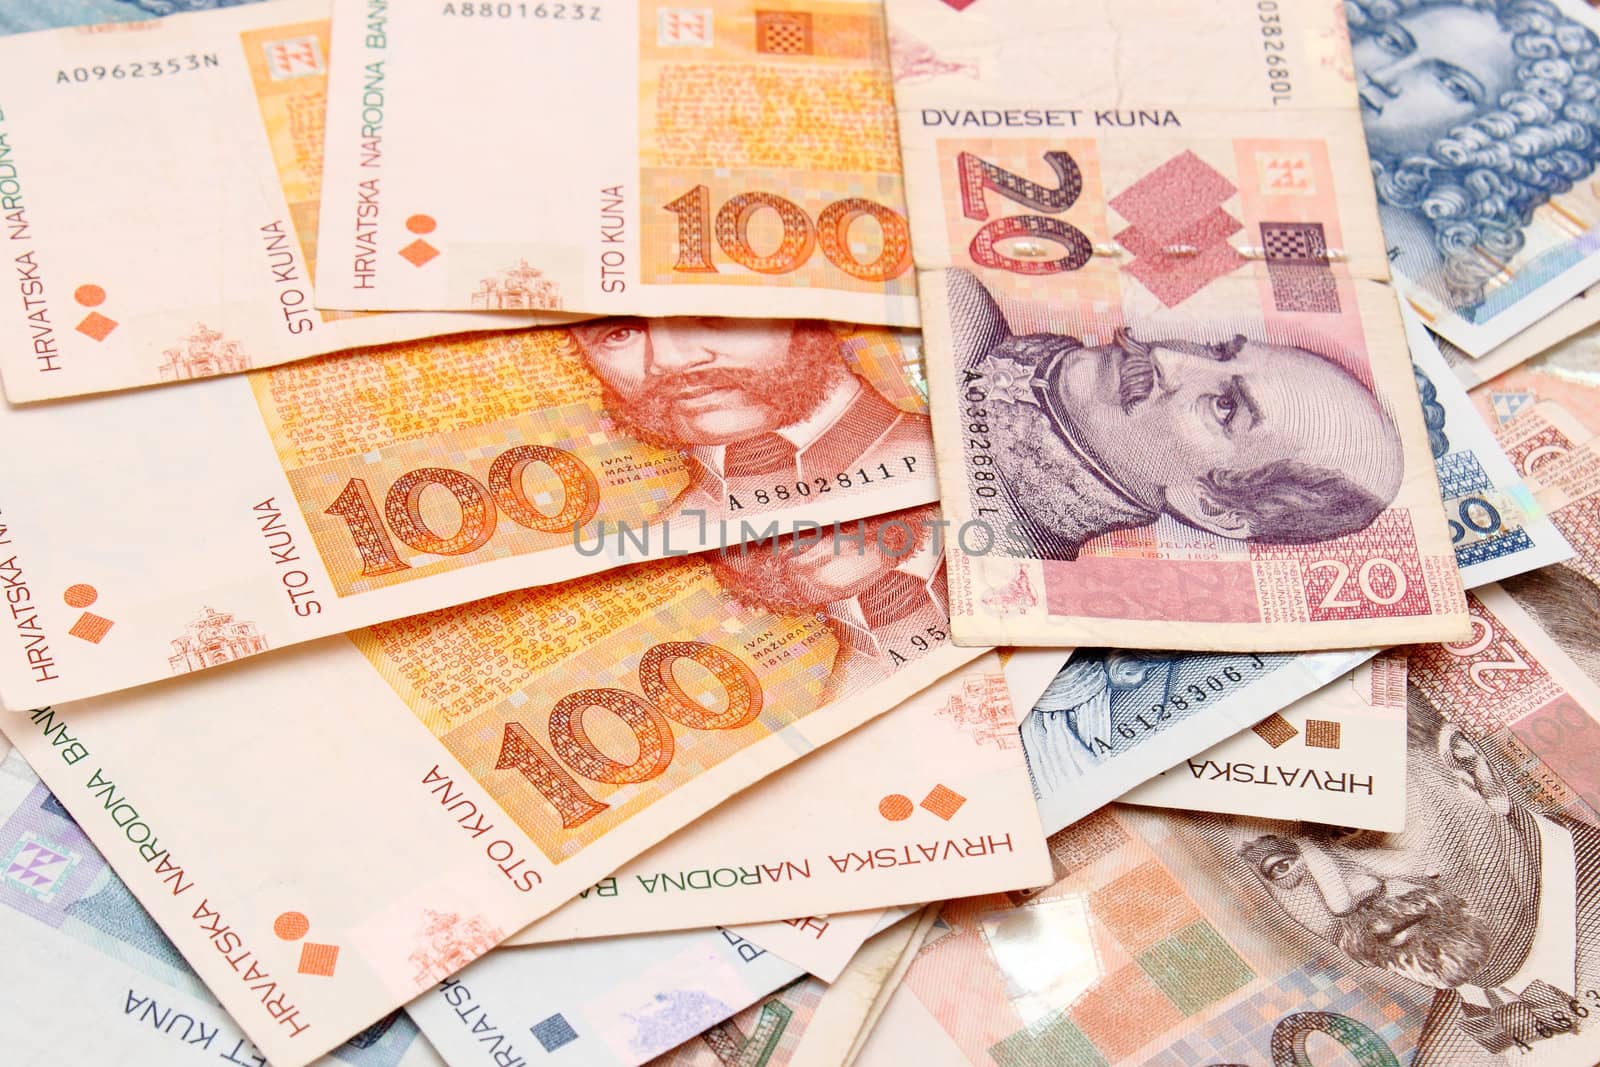 Croatian Kuna banknotes layed out  by artush